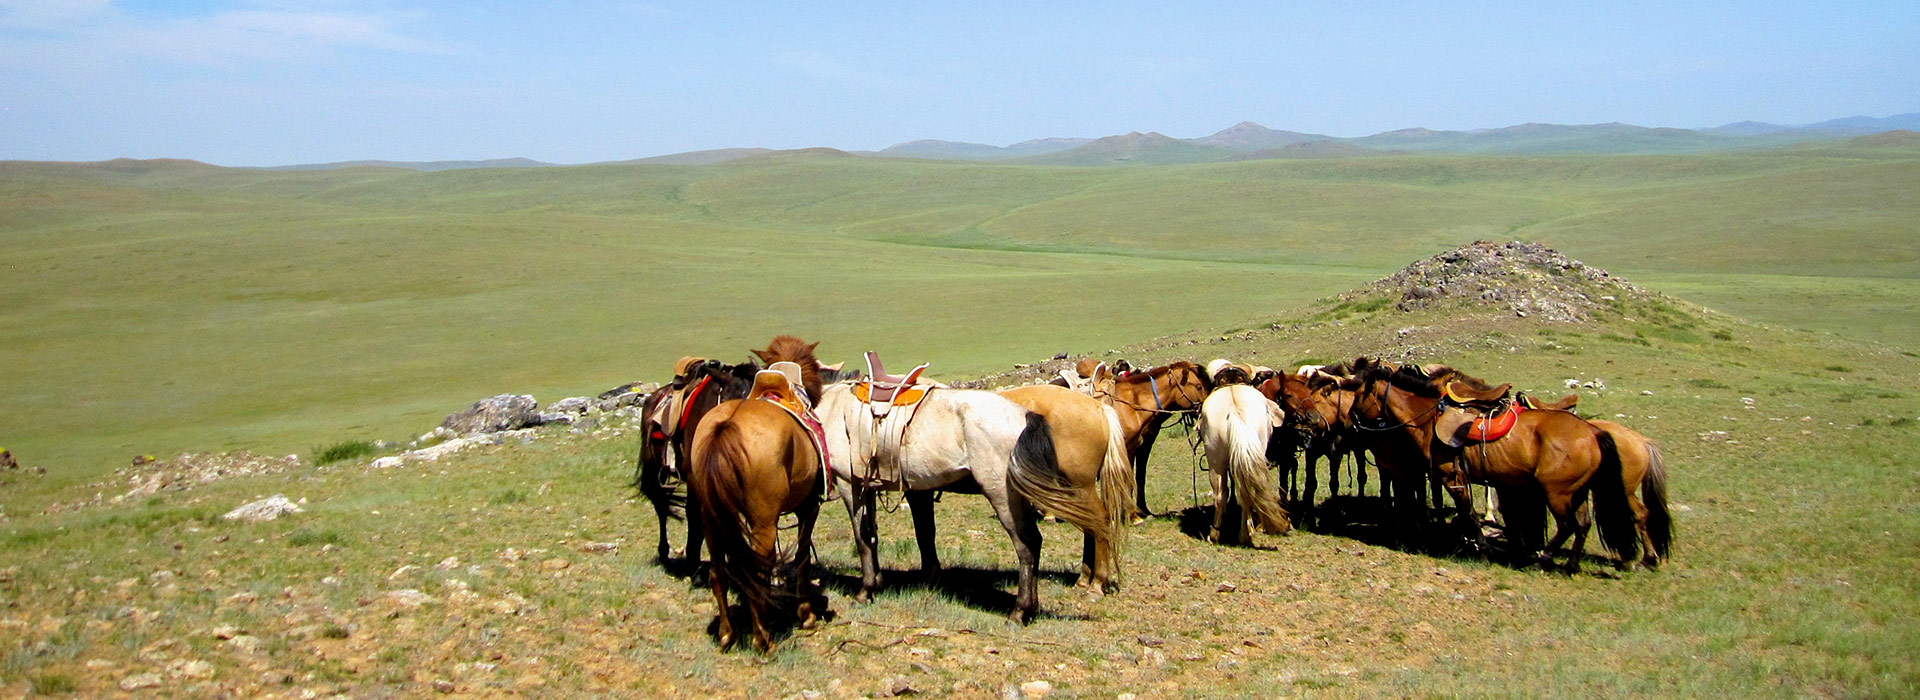 steppe-ride-mongolia-horses-.jpg